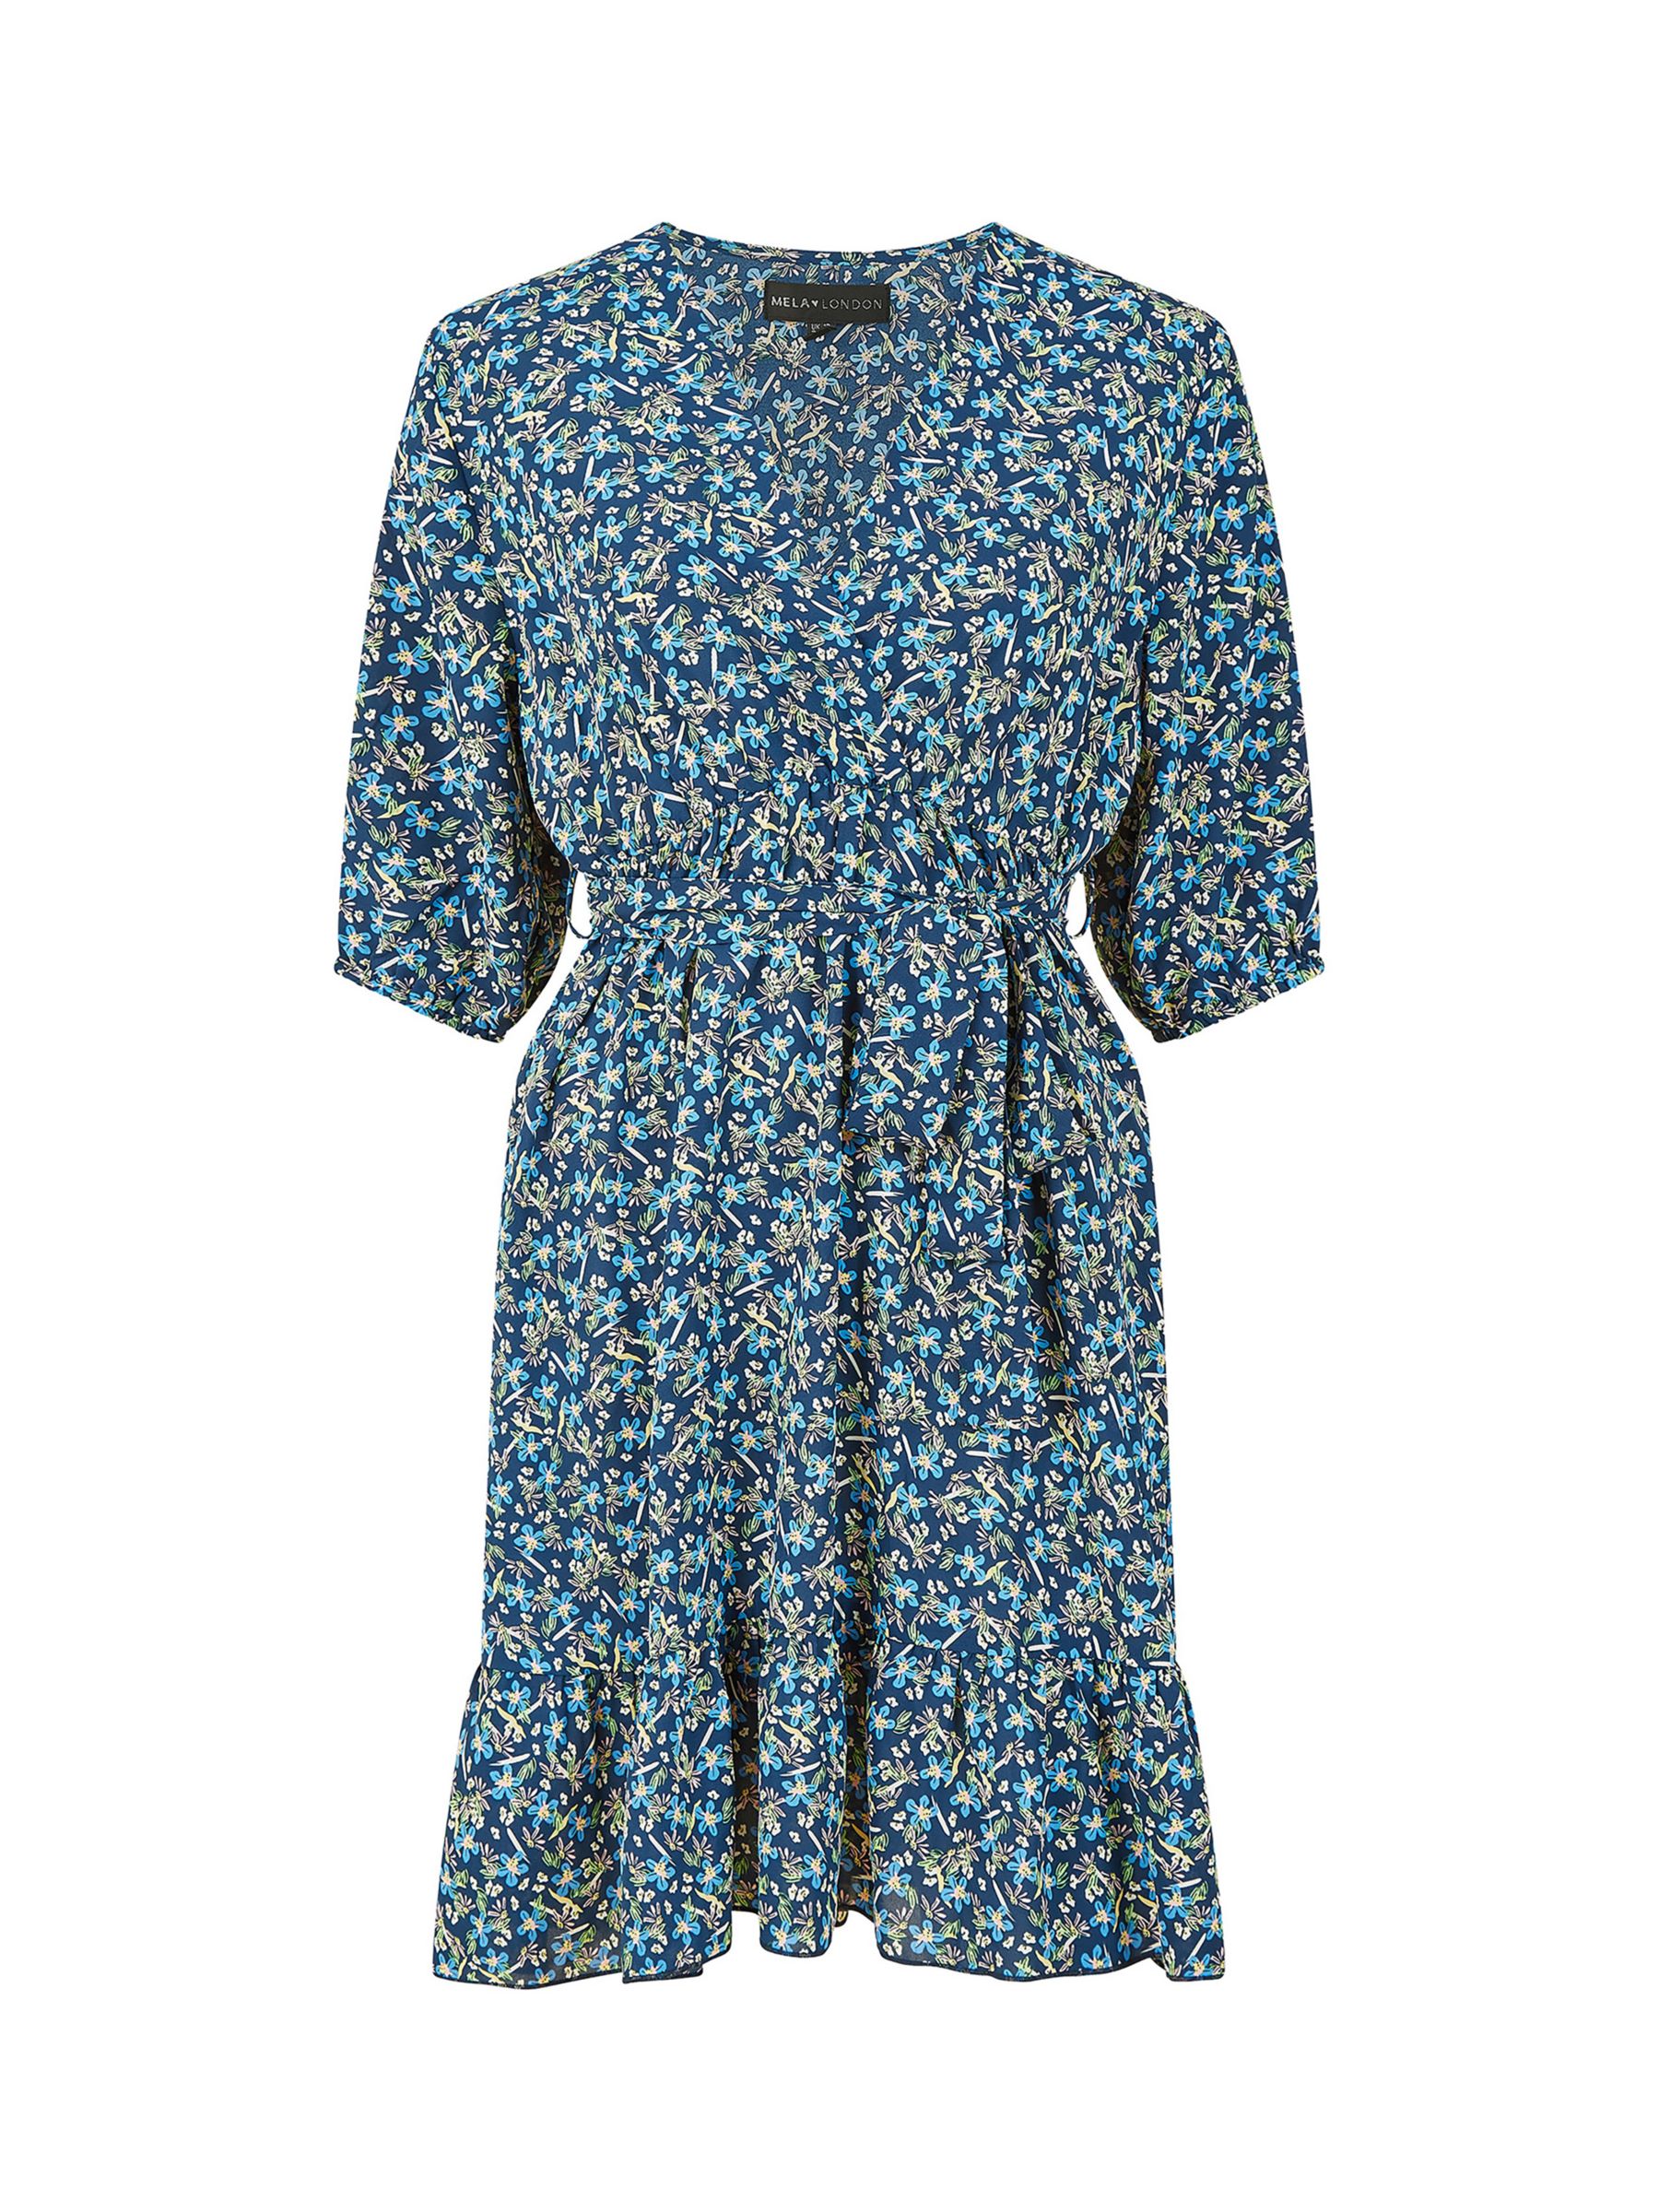 Mela London Ditsy Floral Wrap Skater Dress, Blue, 8